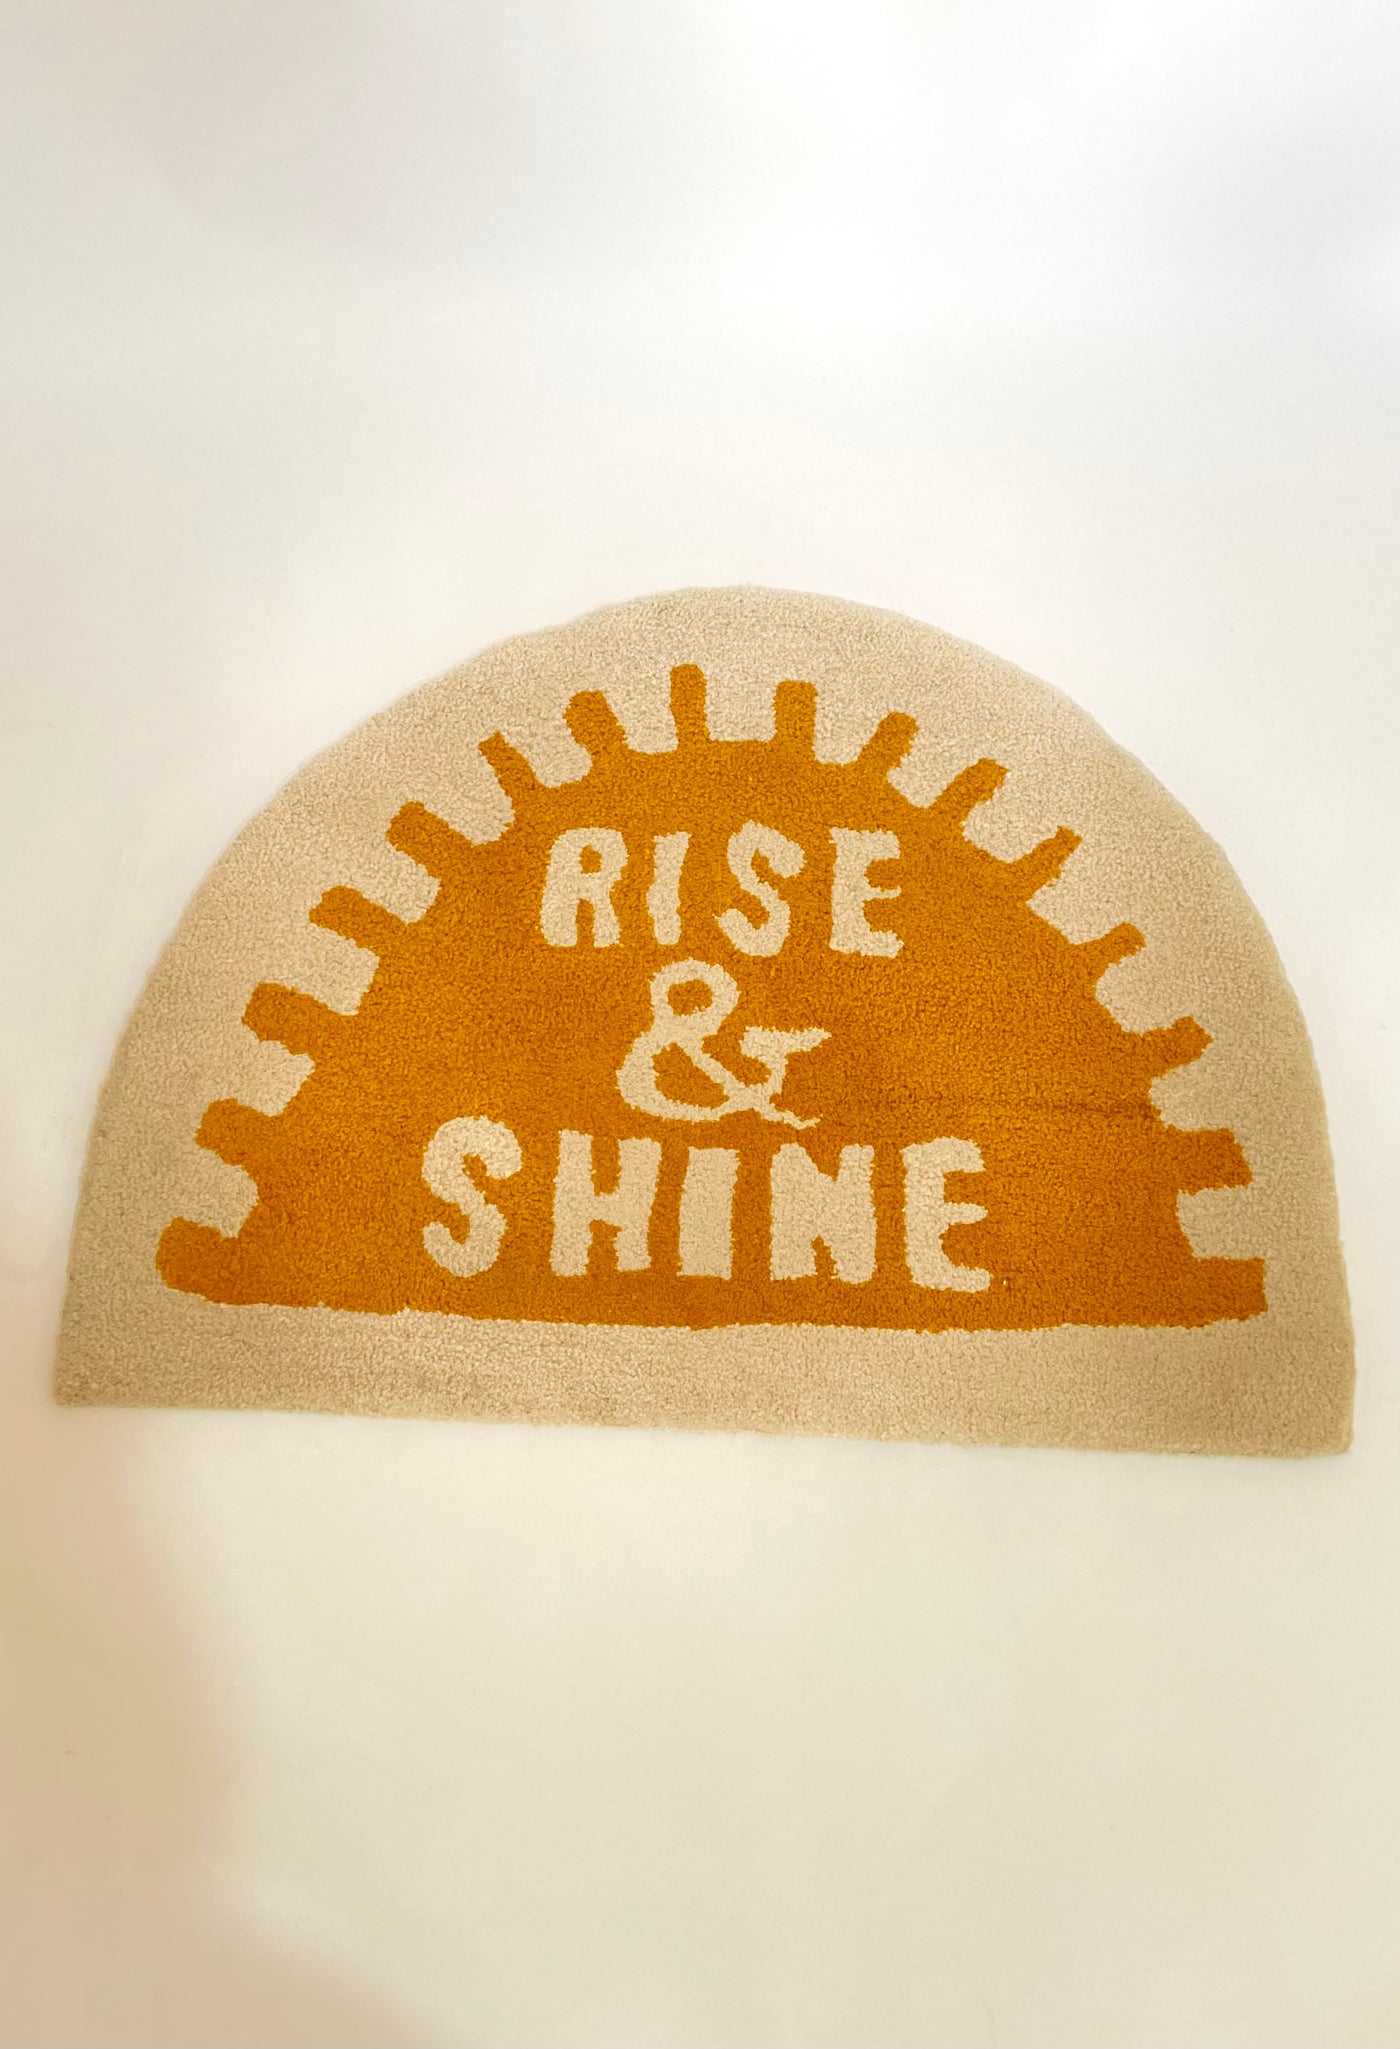 Rise & Shine Rug